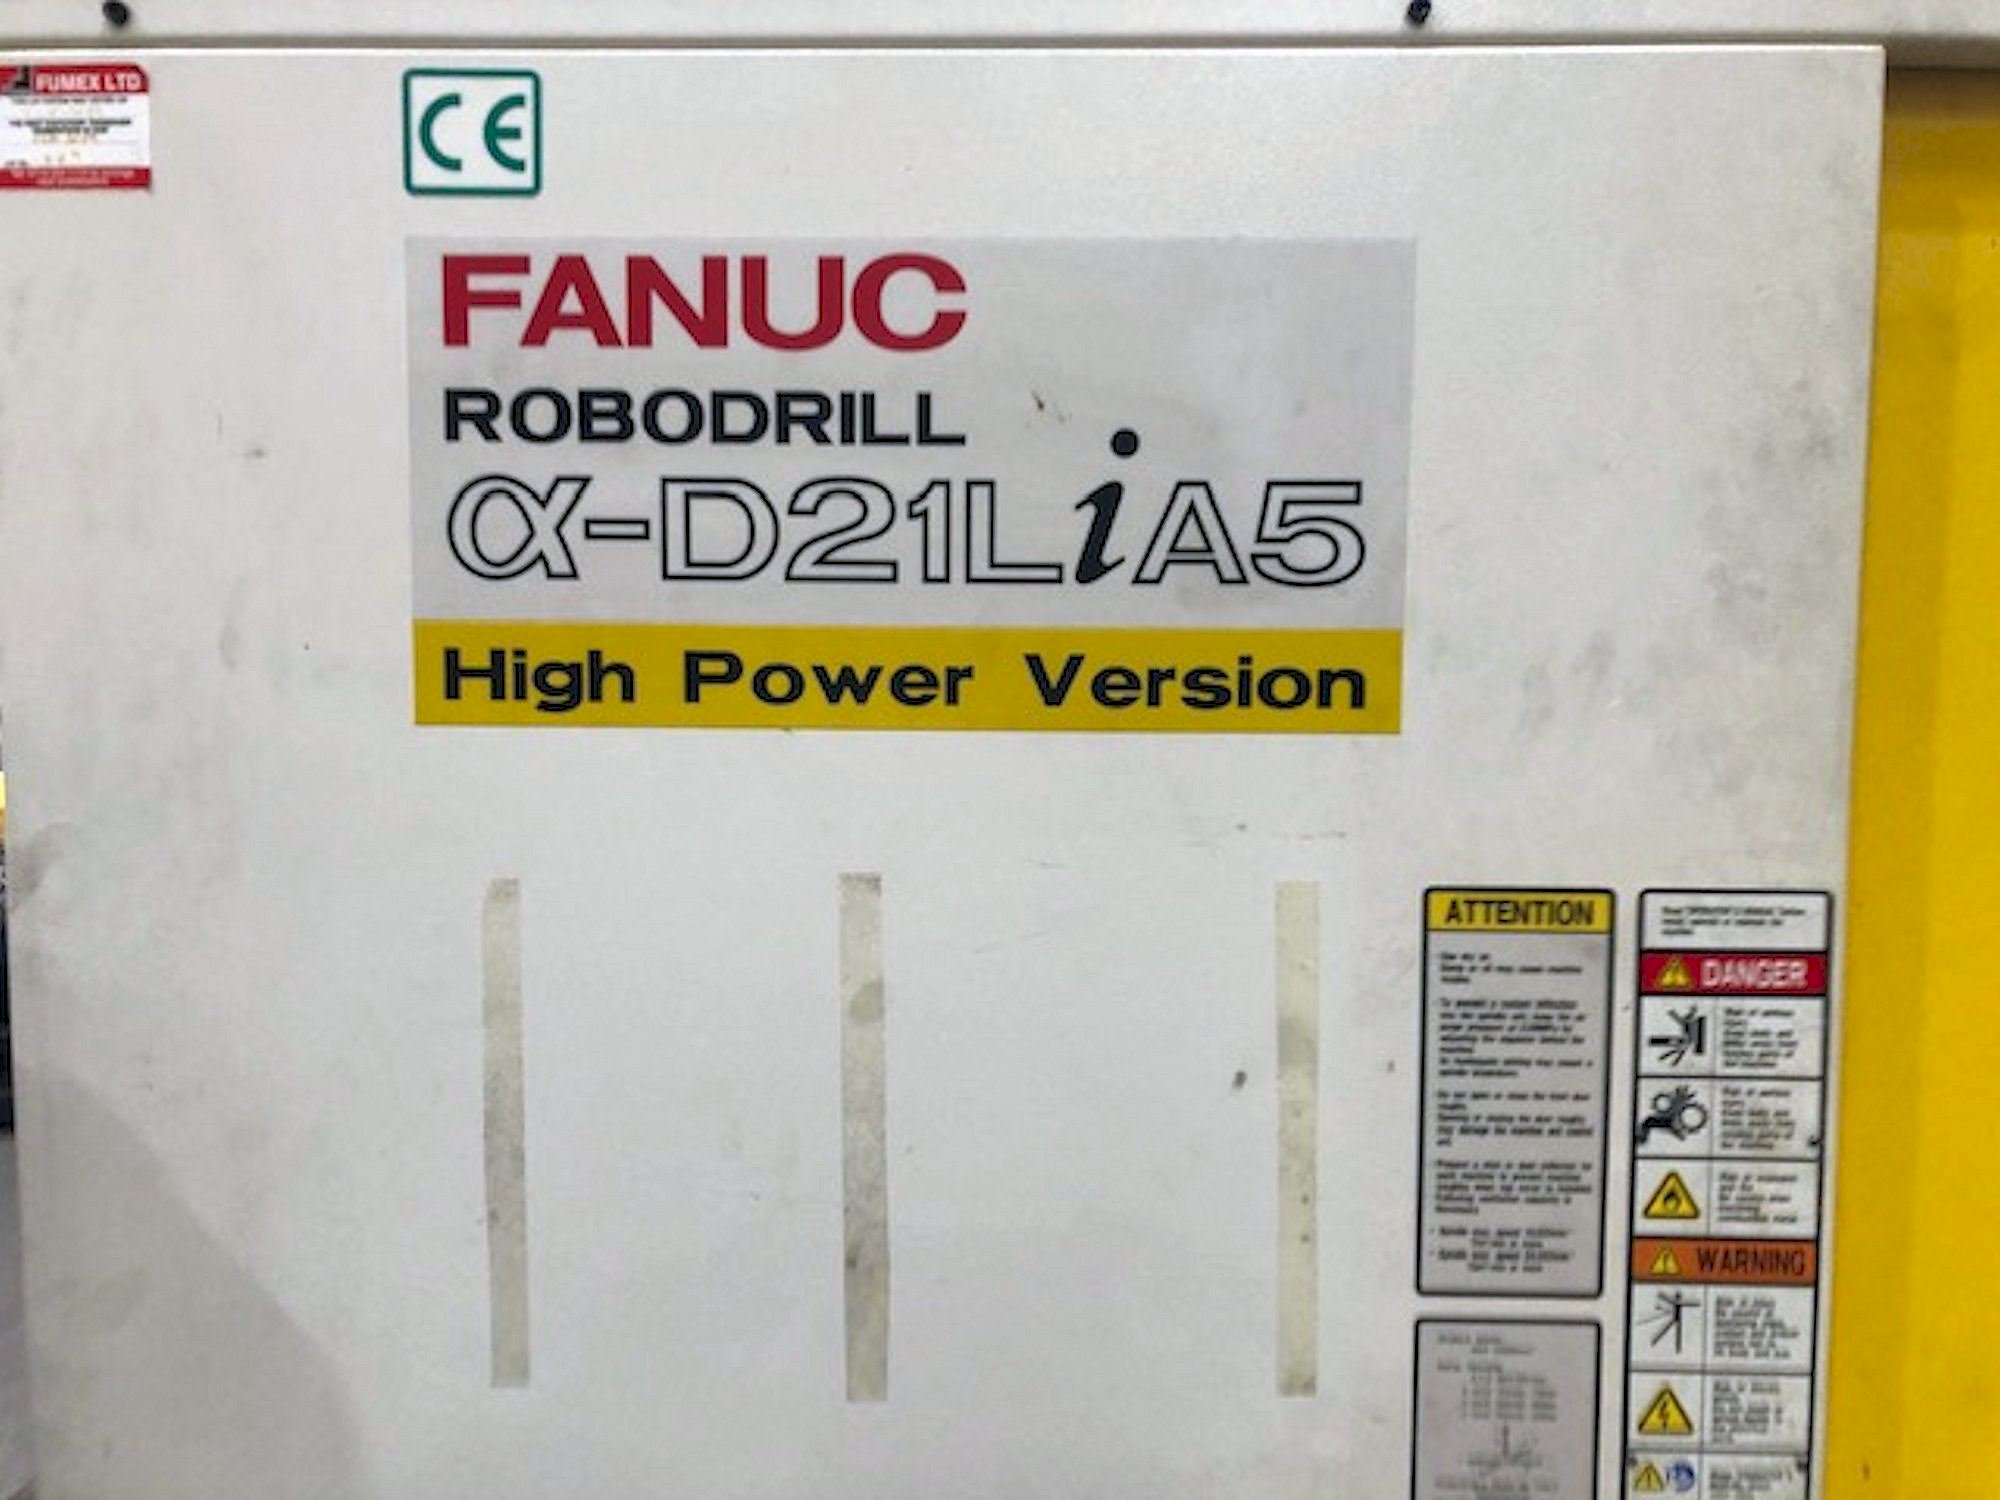 Fanuc #Robodrill-Alpha-D21LIA5, Fanuc 31i-B5, 27.5 X, 15.7 Y, 12.9 Z,  10000 RPM, 21 automatic tool changer, 2014 for Sale